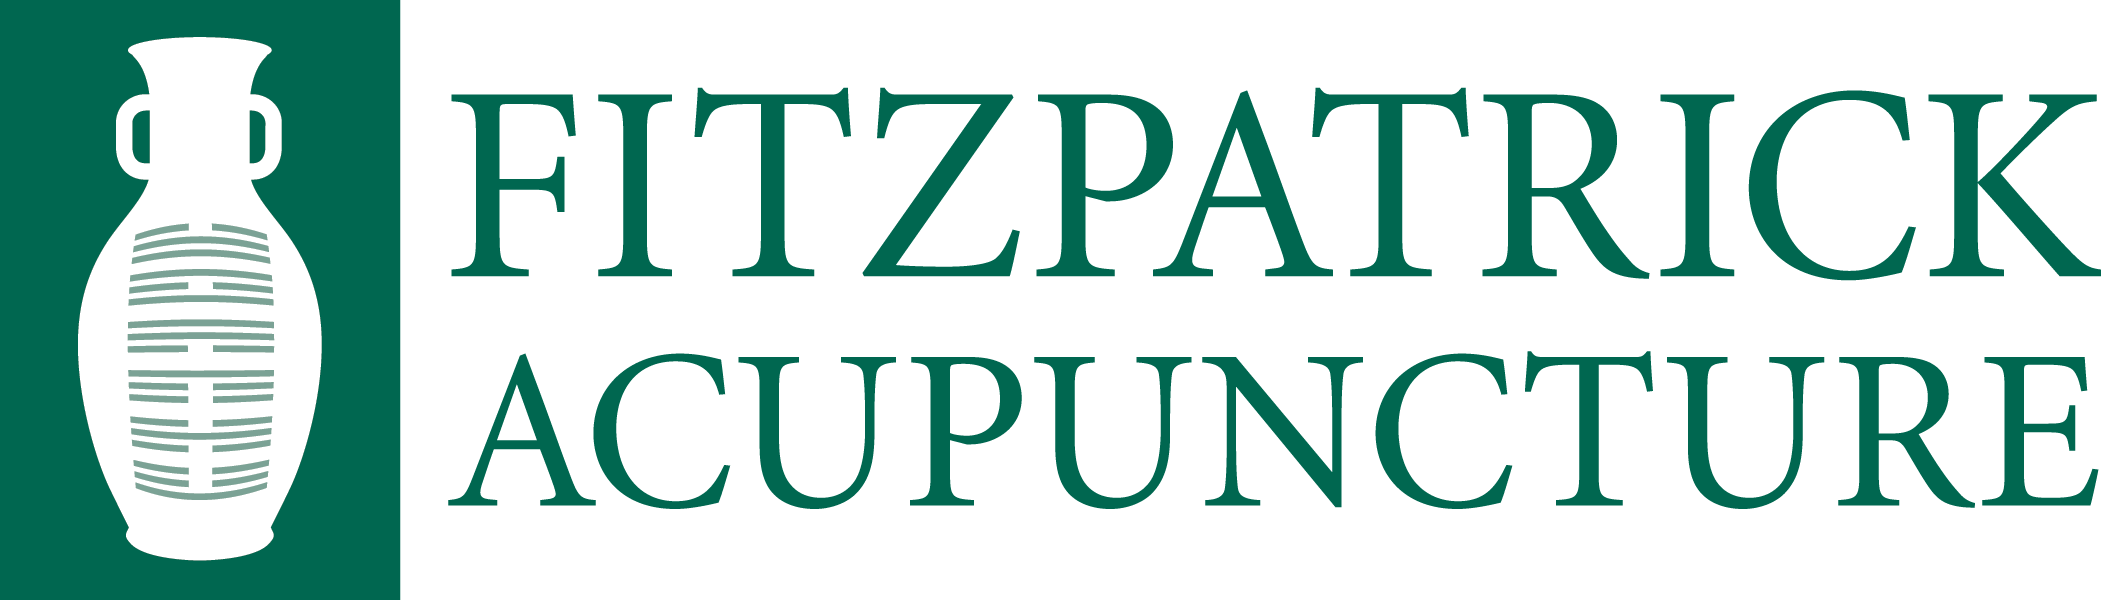 Fitzpatrick Acupuncture logo